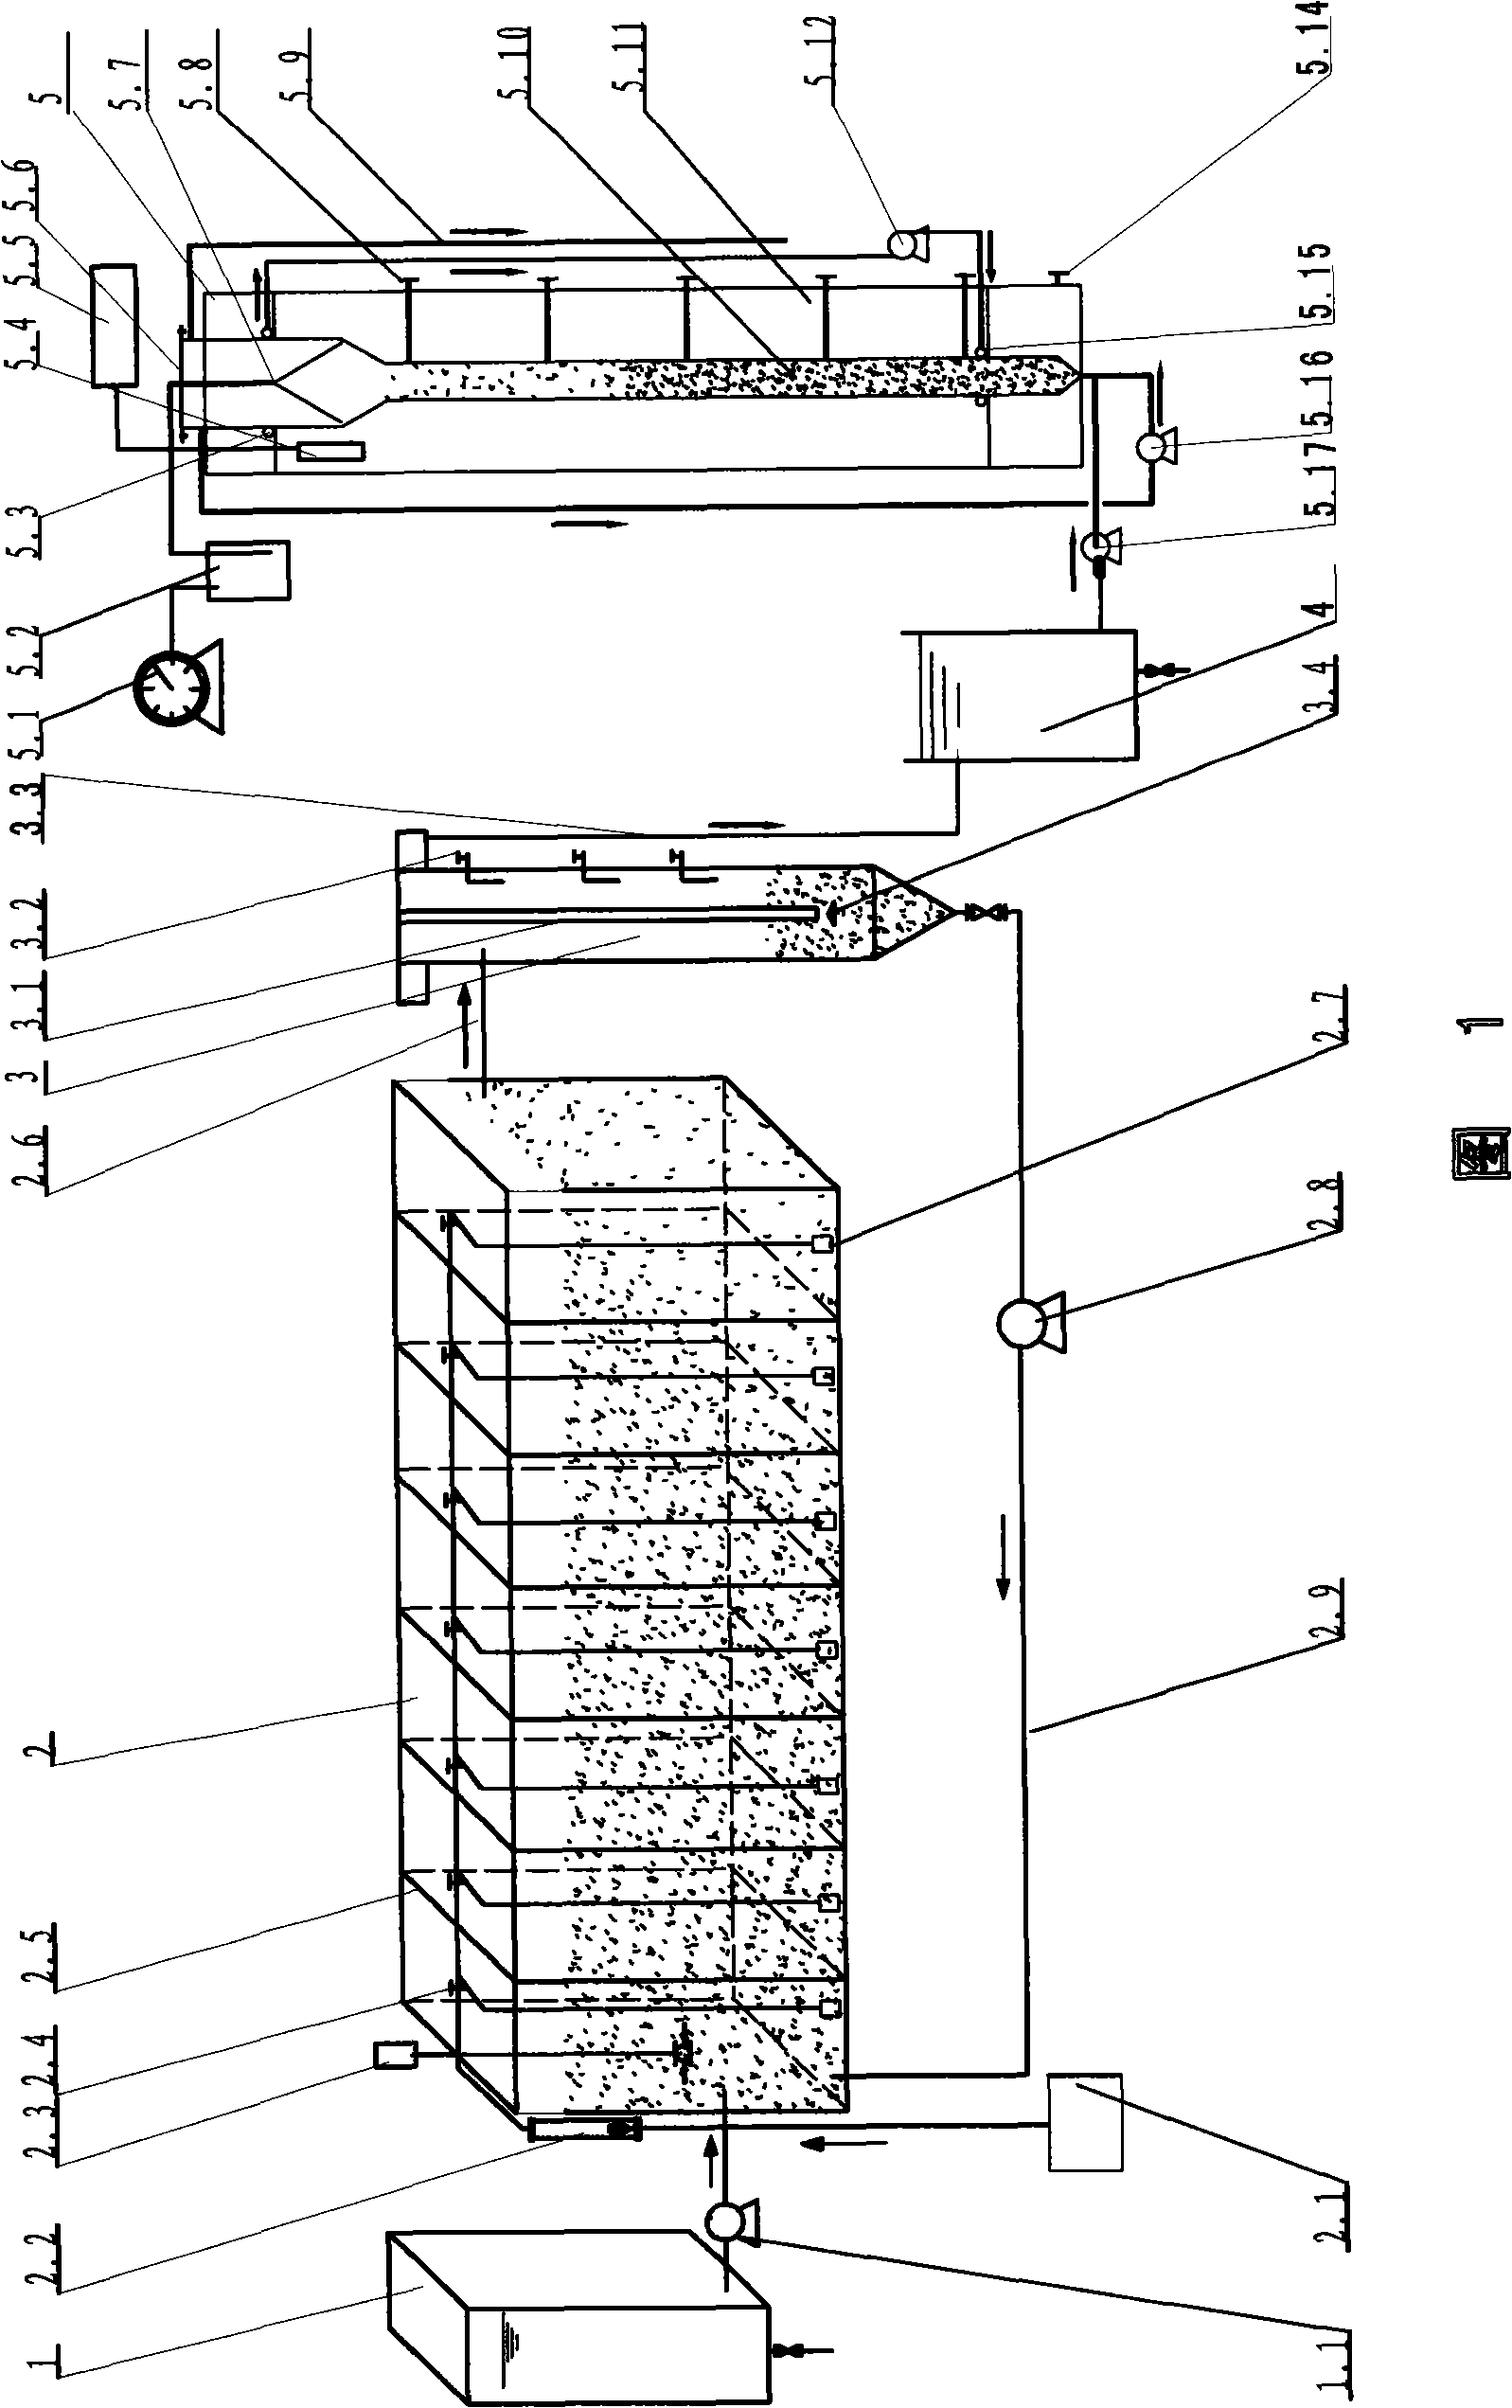 Combined denitrification apparatus and method by shortcut nitrification and anaerobic ammonium oxidation of sludge-digestion liquid